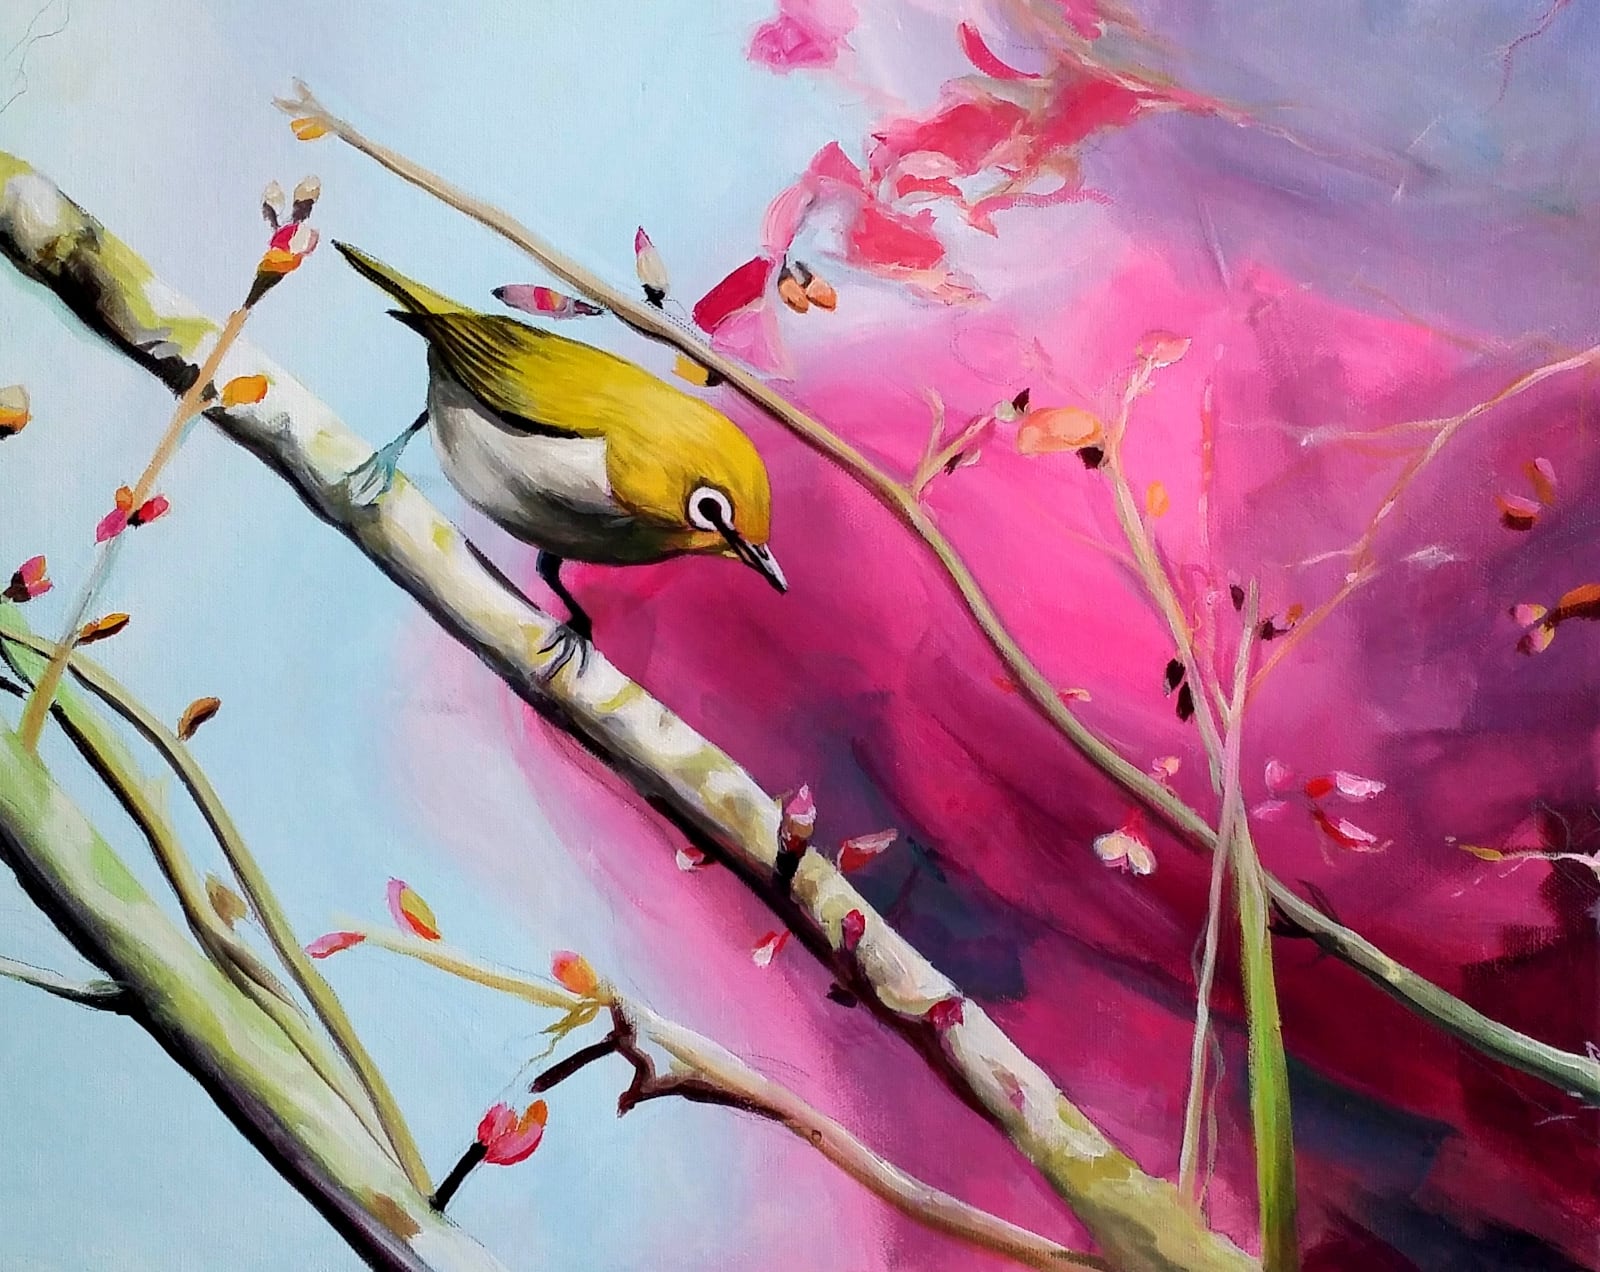 dipinto di un uccello giallo e bianco su un ramo, con uno sfondo sfumato rosa e celeste